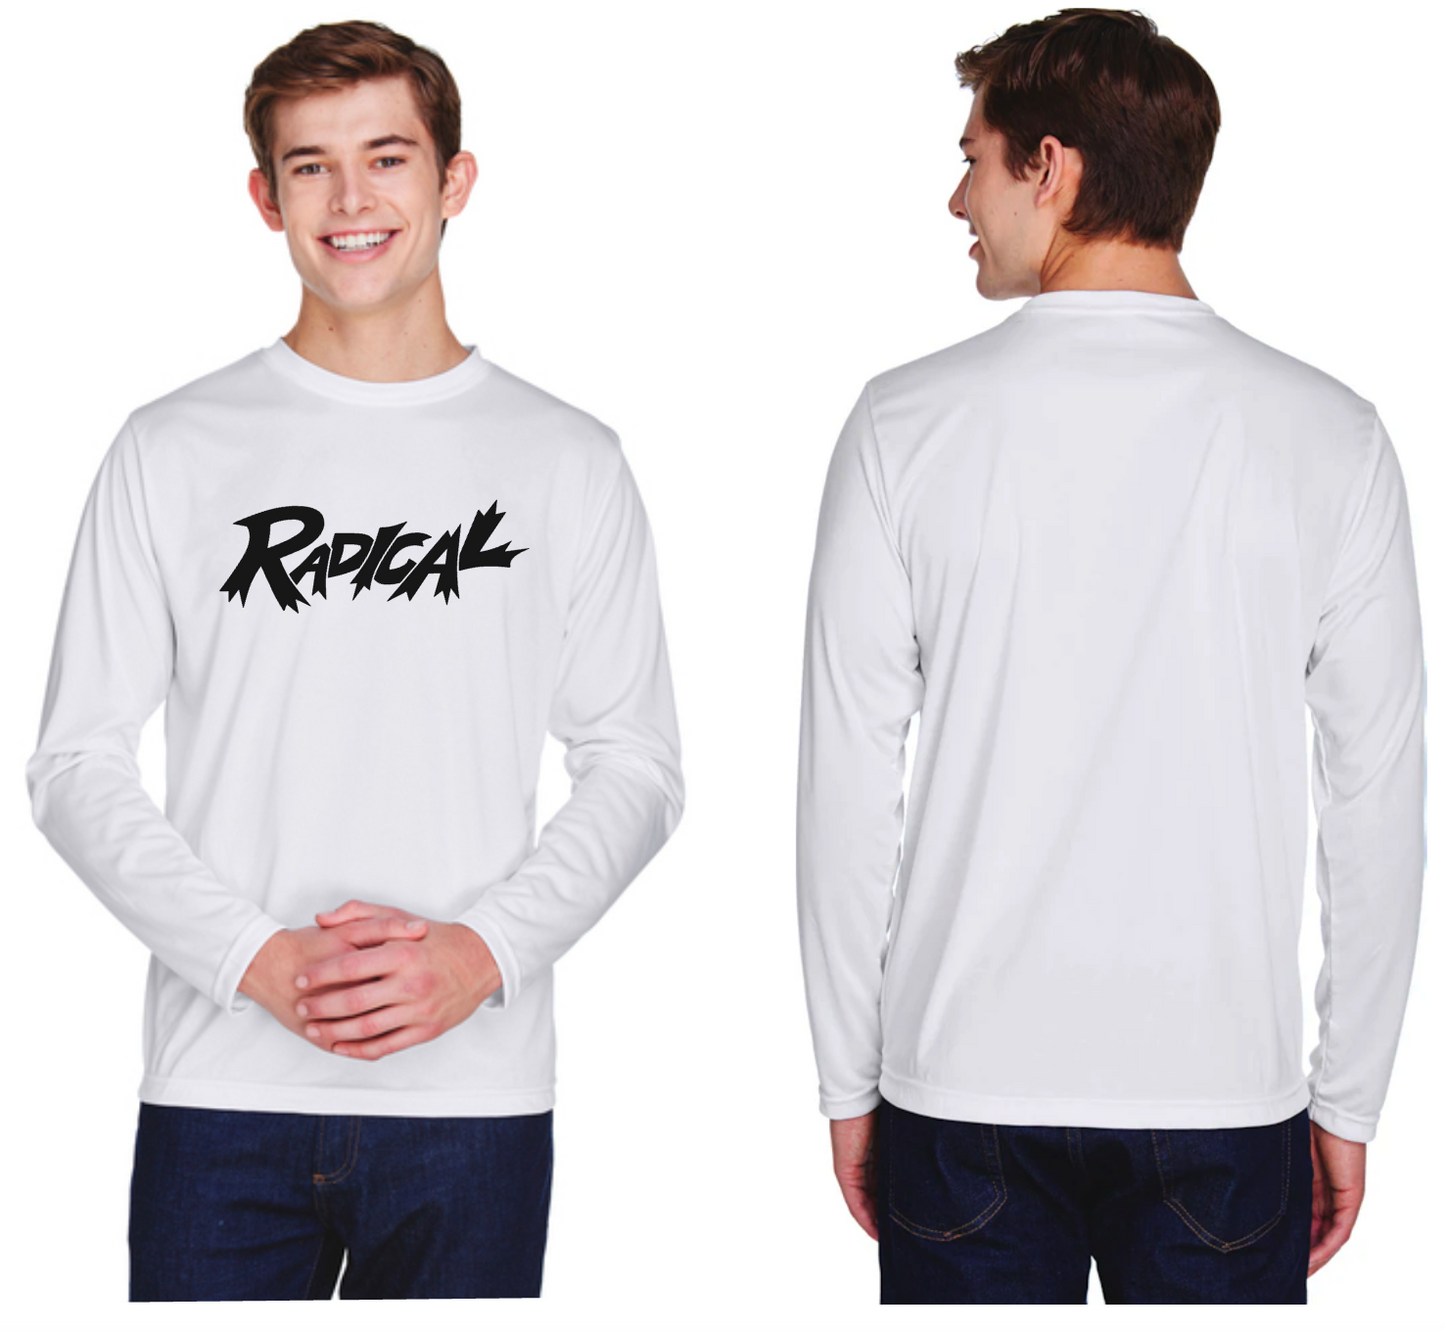 performance brand collection shirts - Radical